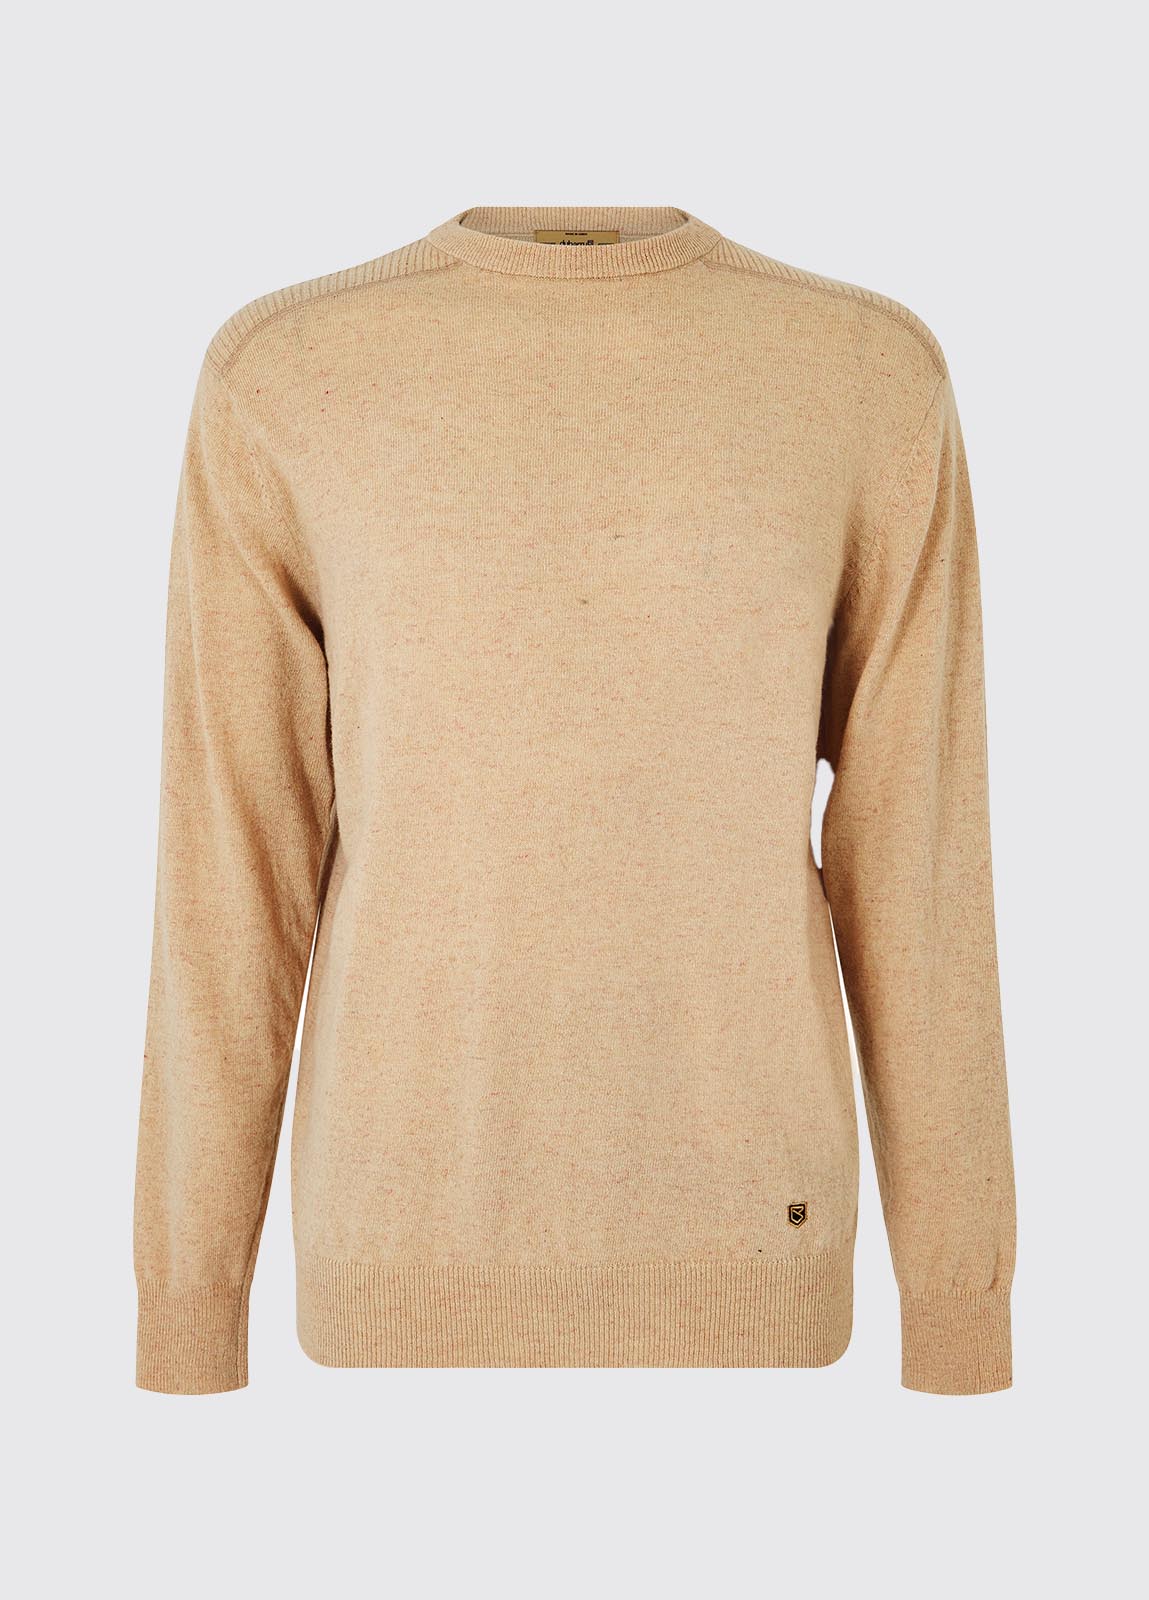 Maguire Men's Sweater - Camel